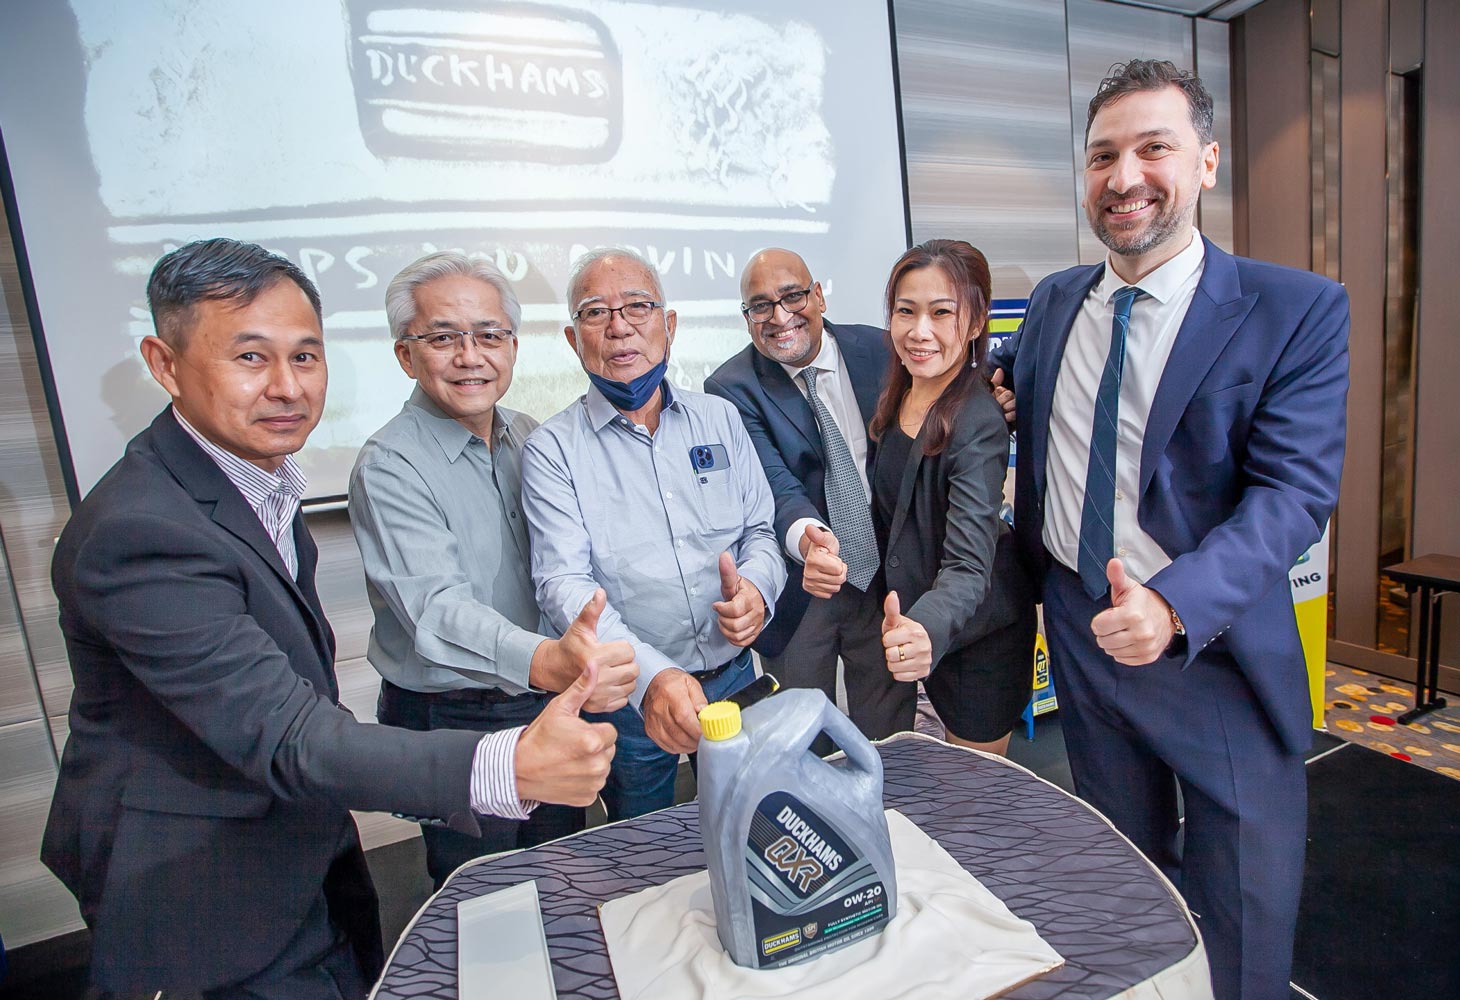 Duckhams launches rebranding initiative in Malaysia, Singapore